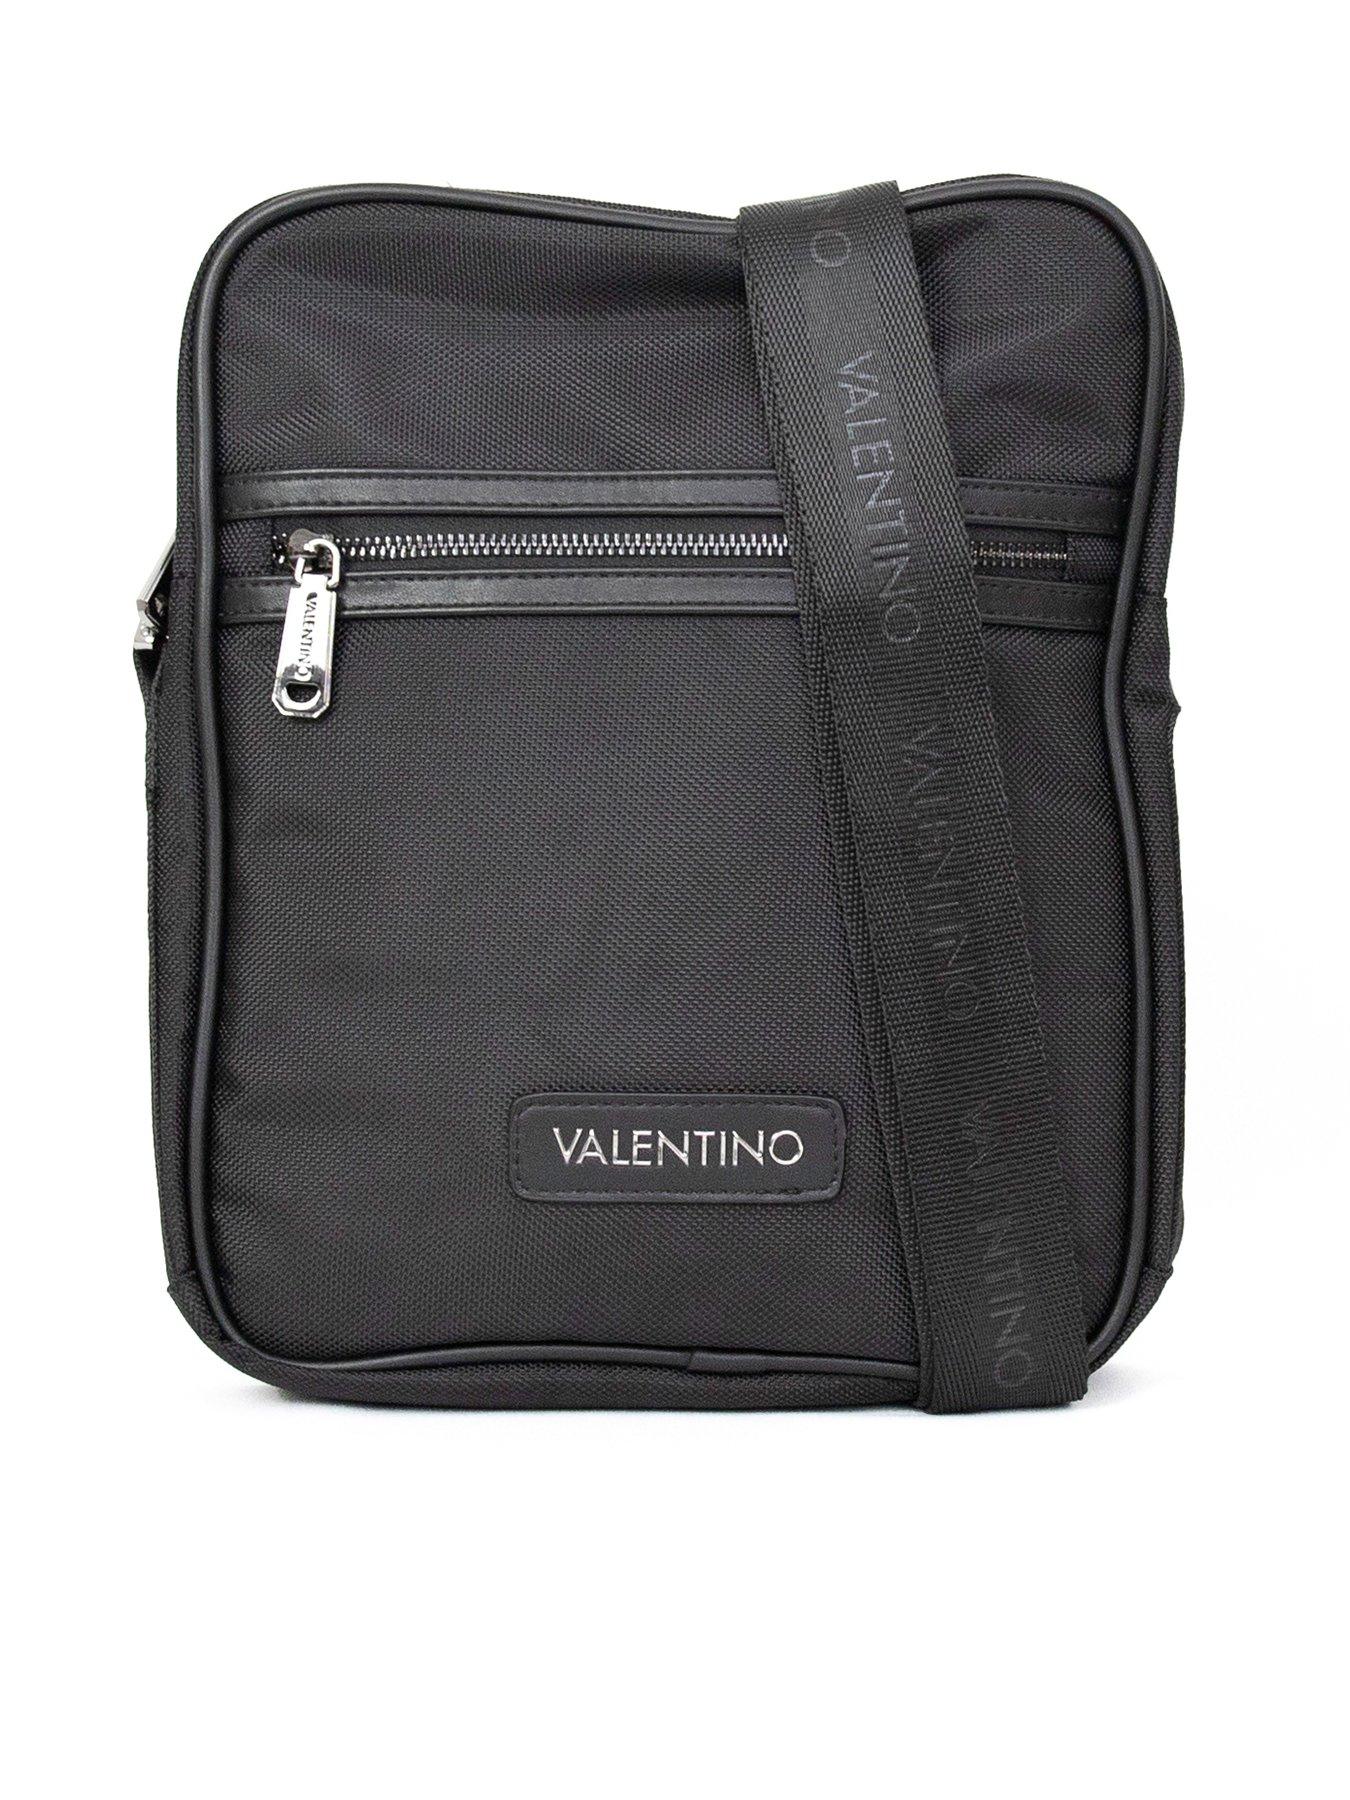 Valentino Men's Anakin Small Cross Body Bag - Black